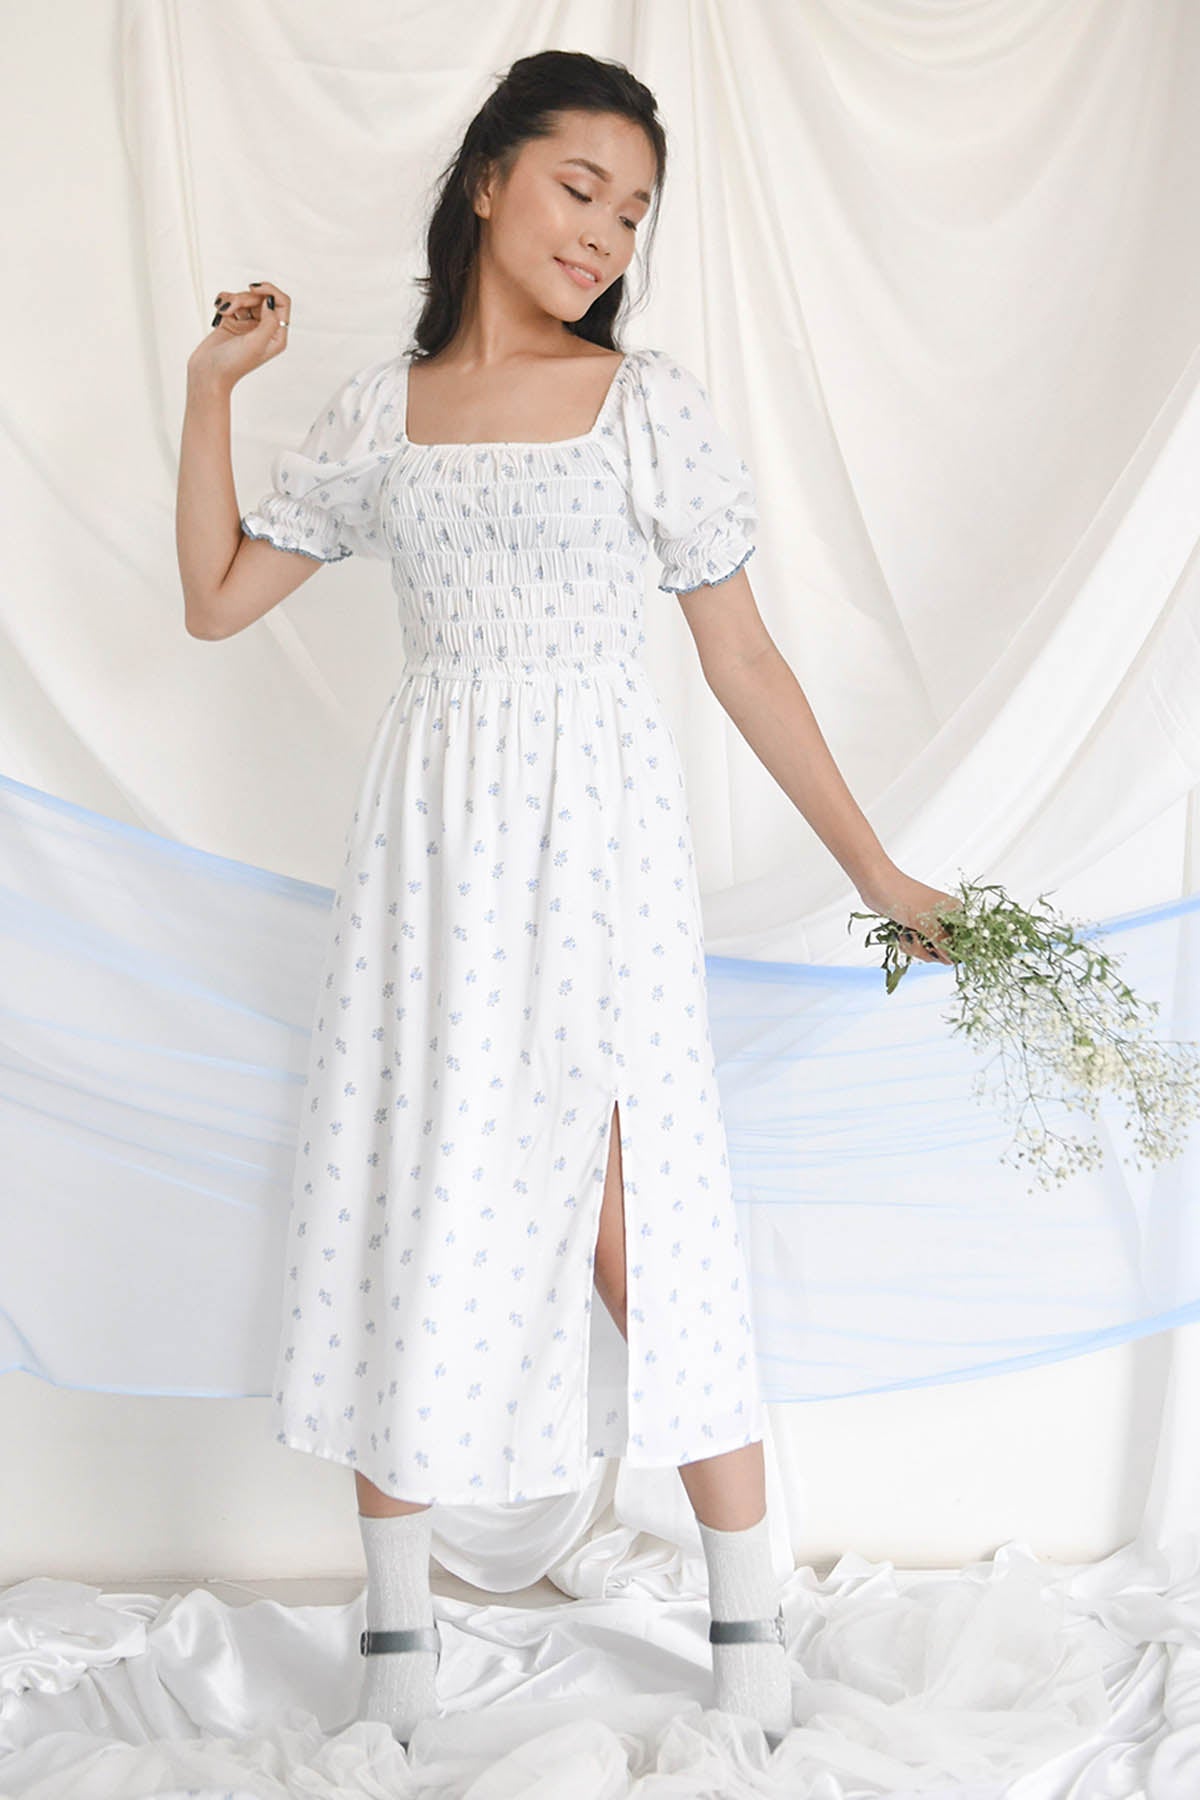 Bohobi White Cotton Rose Print Dress For Women Online at ScrollnShops